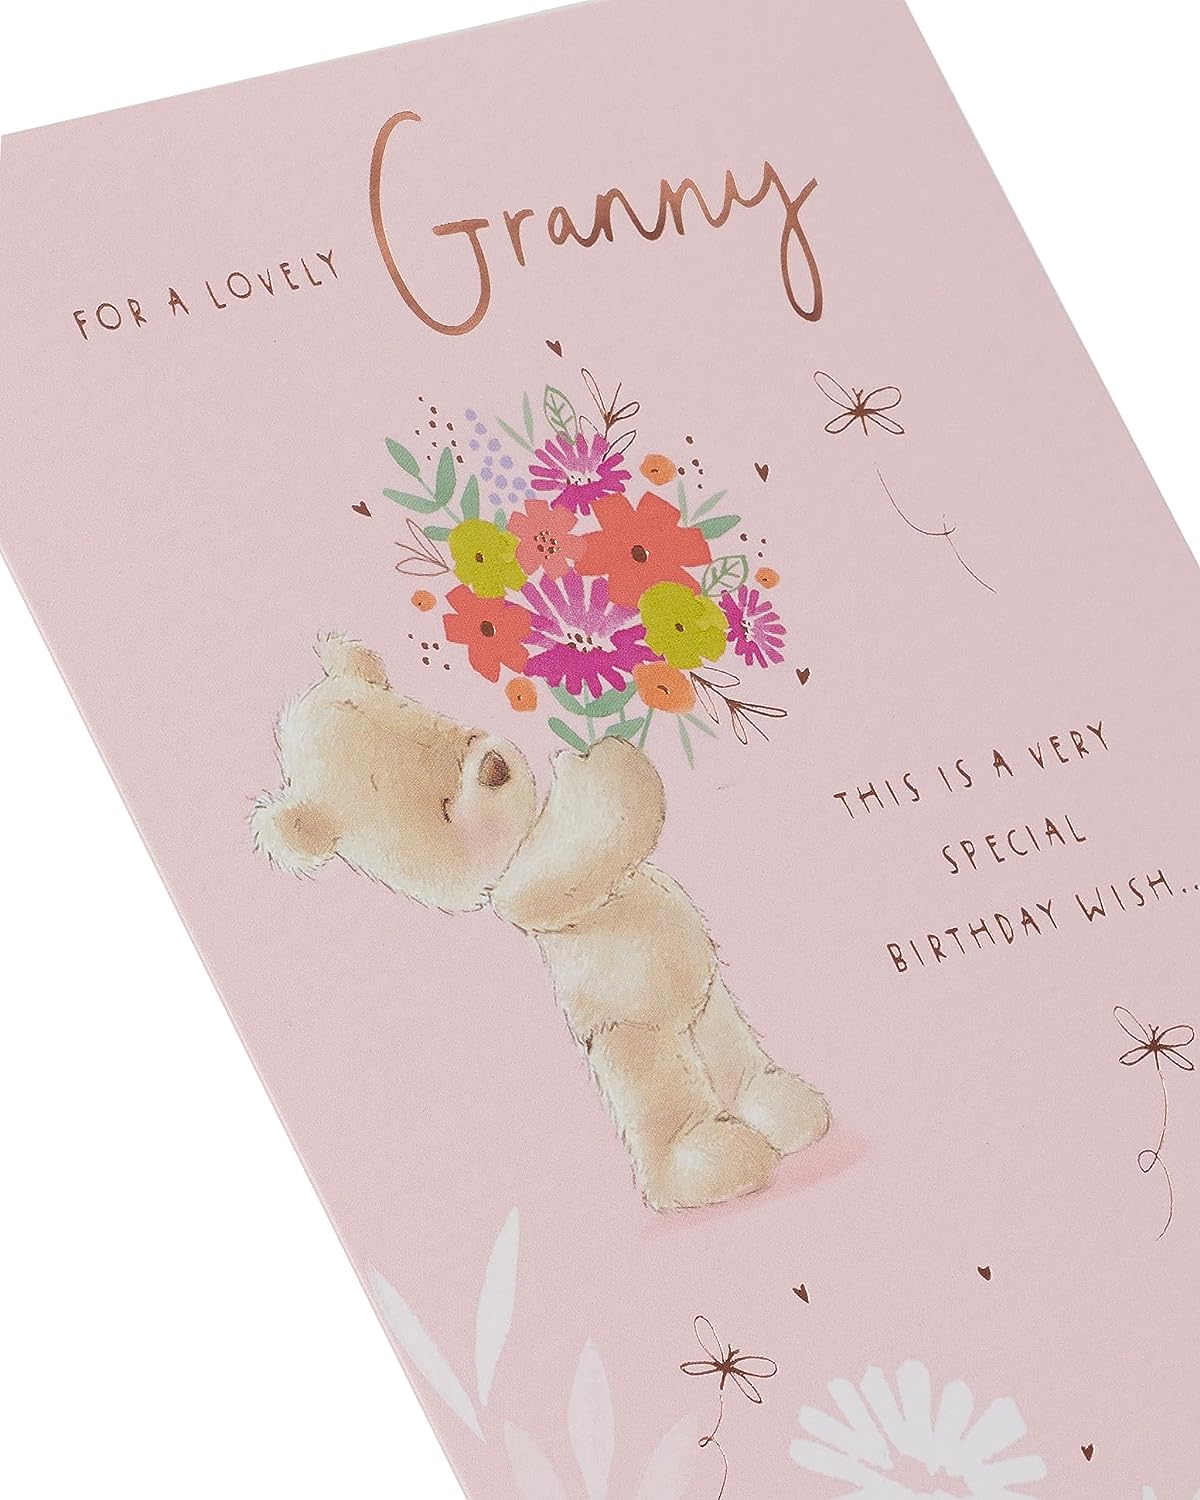 Teddy & Flowers Design Granny Birthday Card 